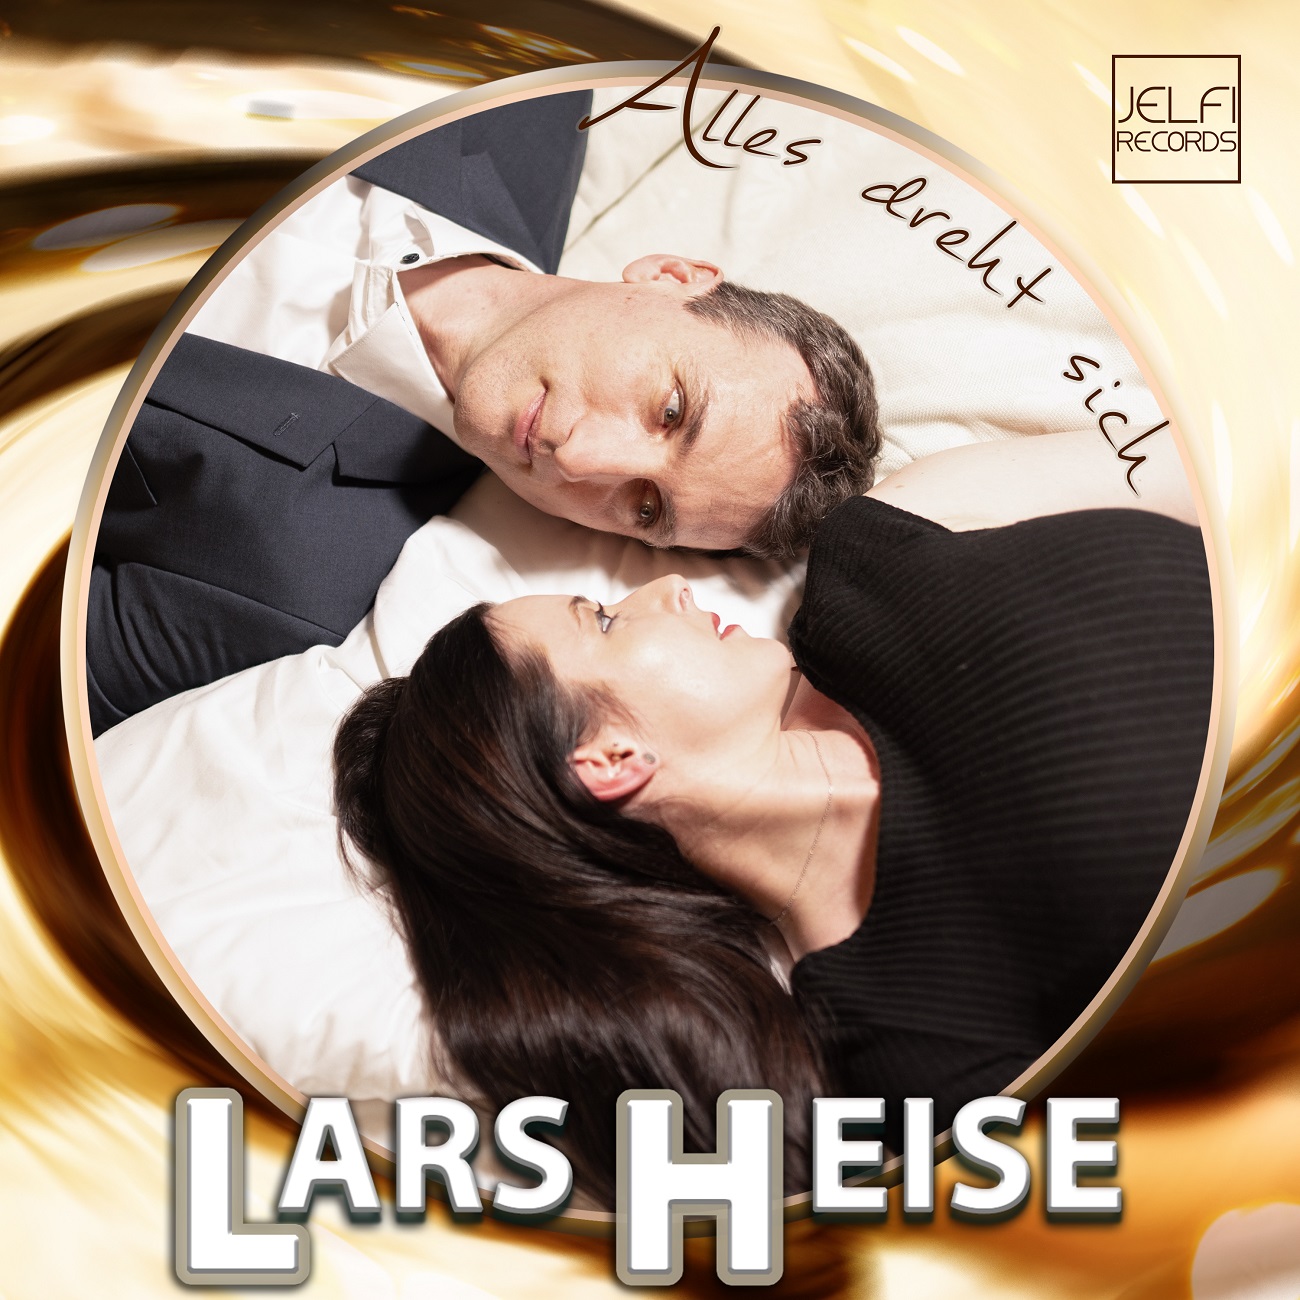 Lars Heise - Alles dreht sich - Cover JPEG.jpg